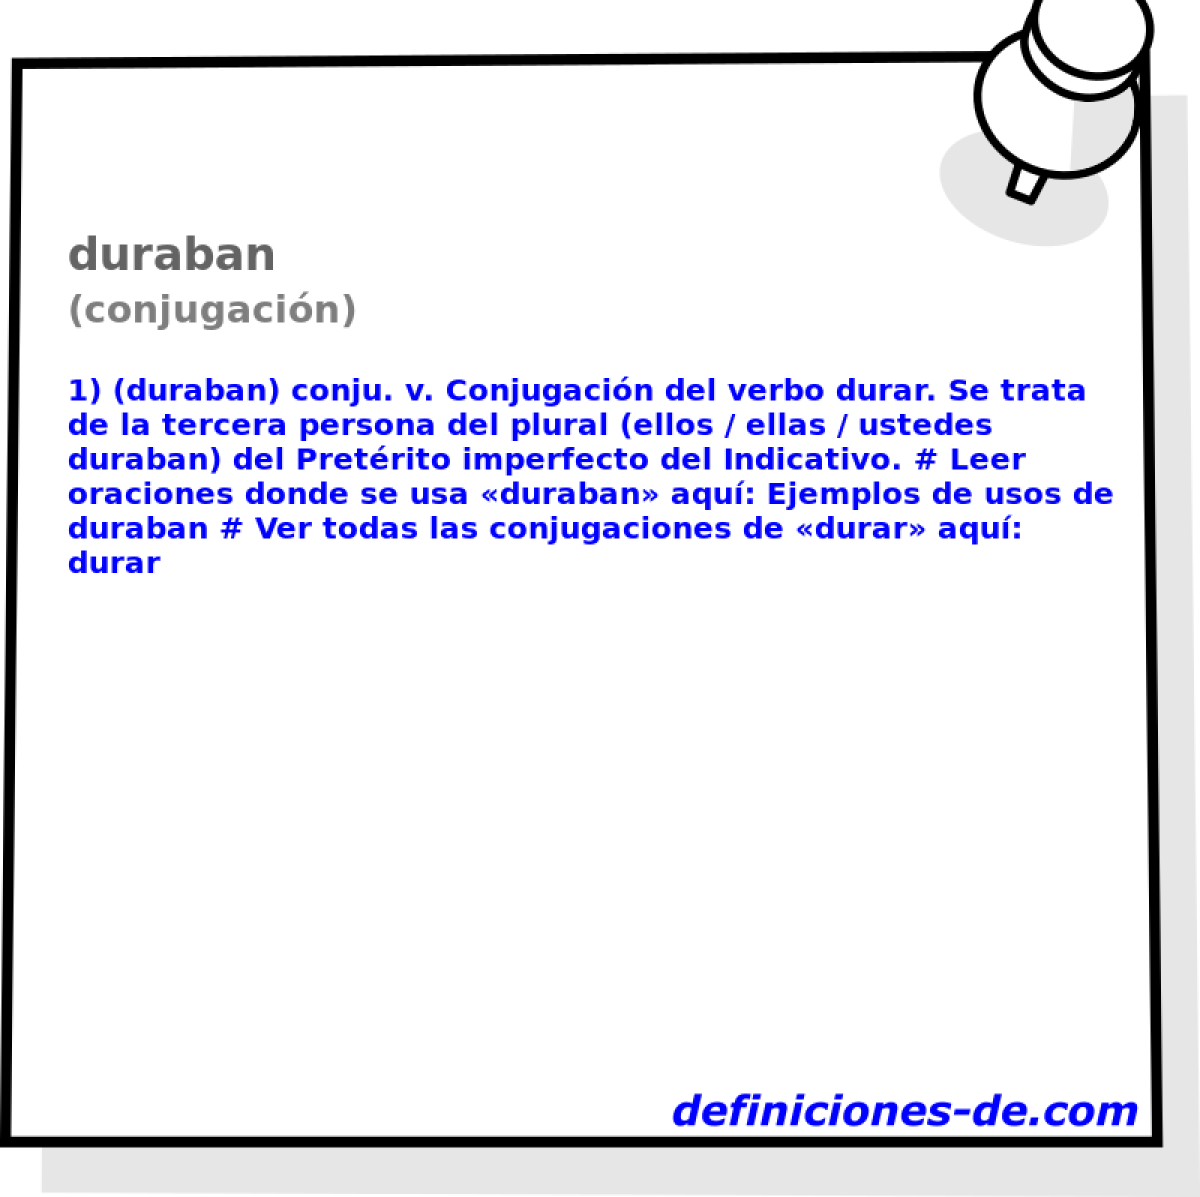 duraban (conjugacin)